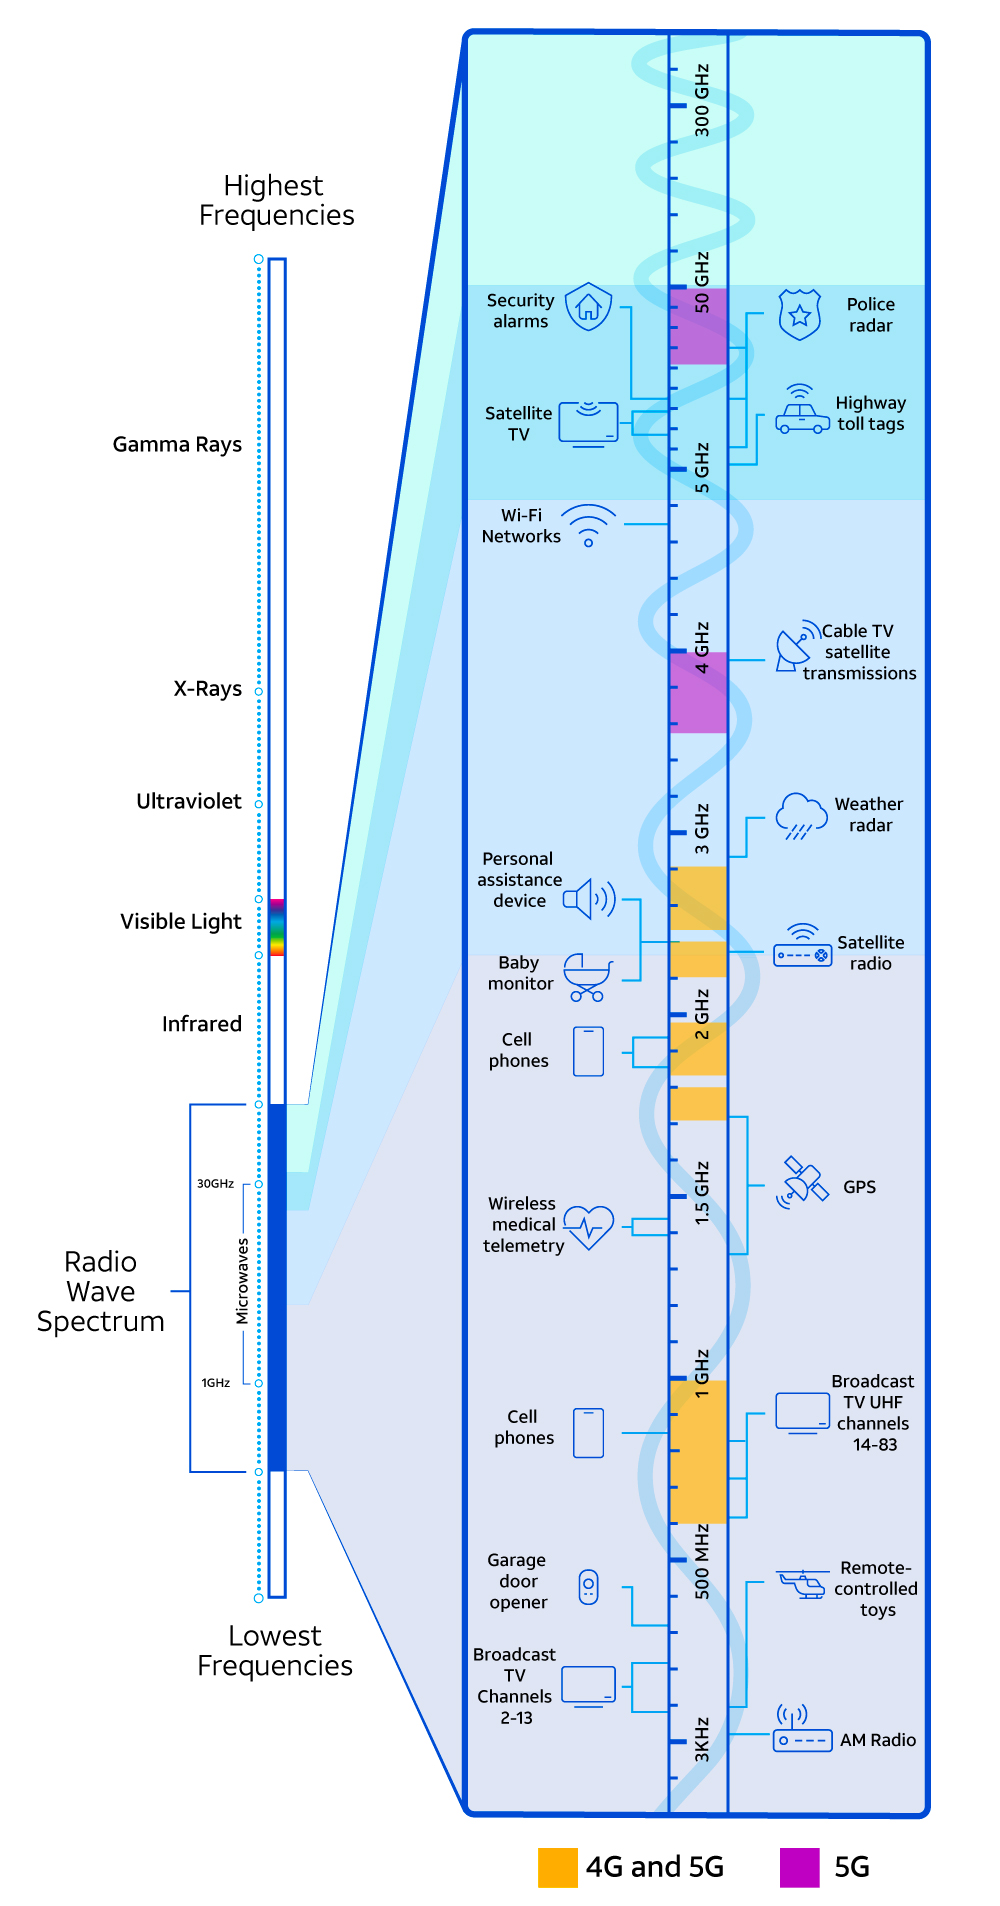 Radio Waves Diagram